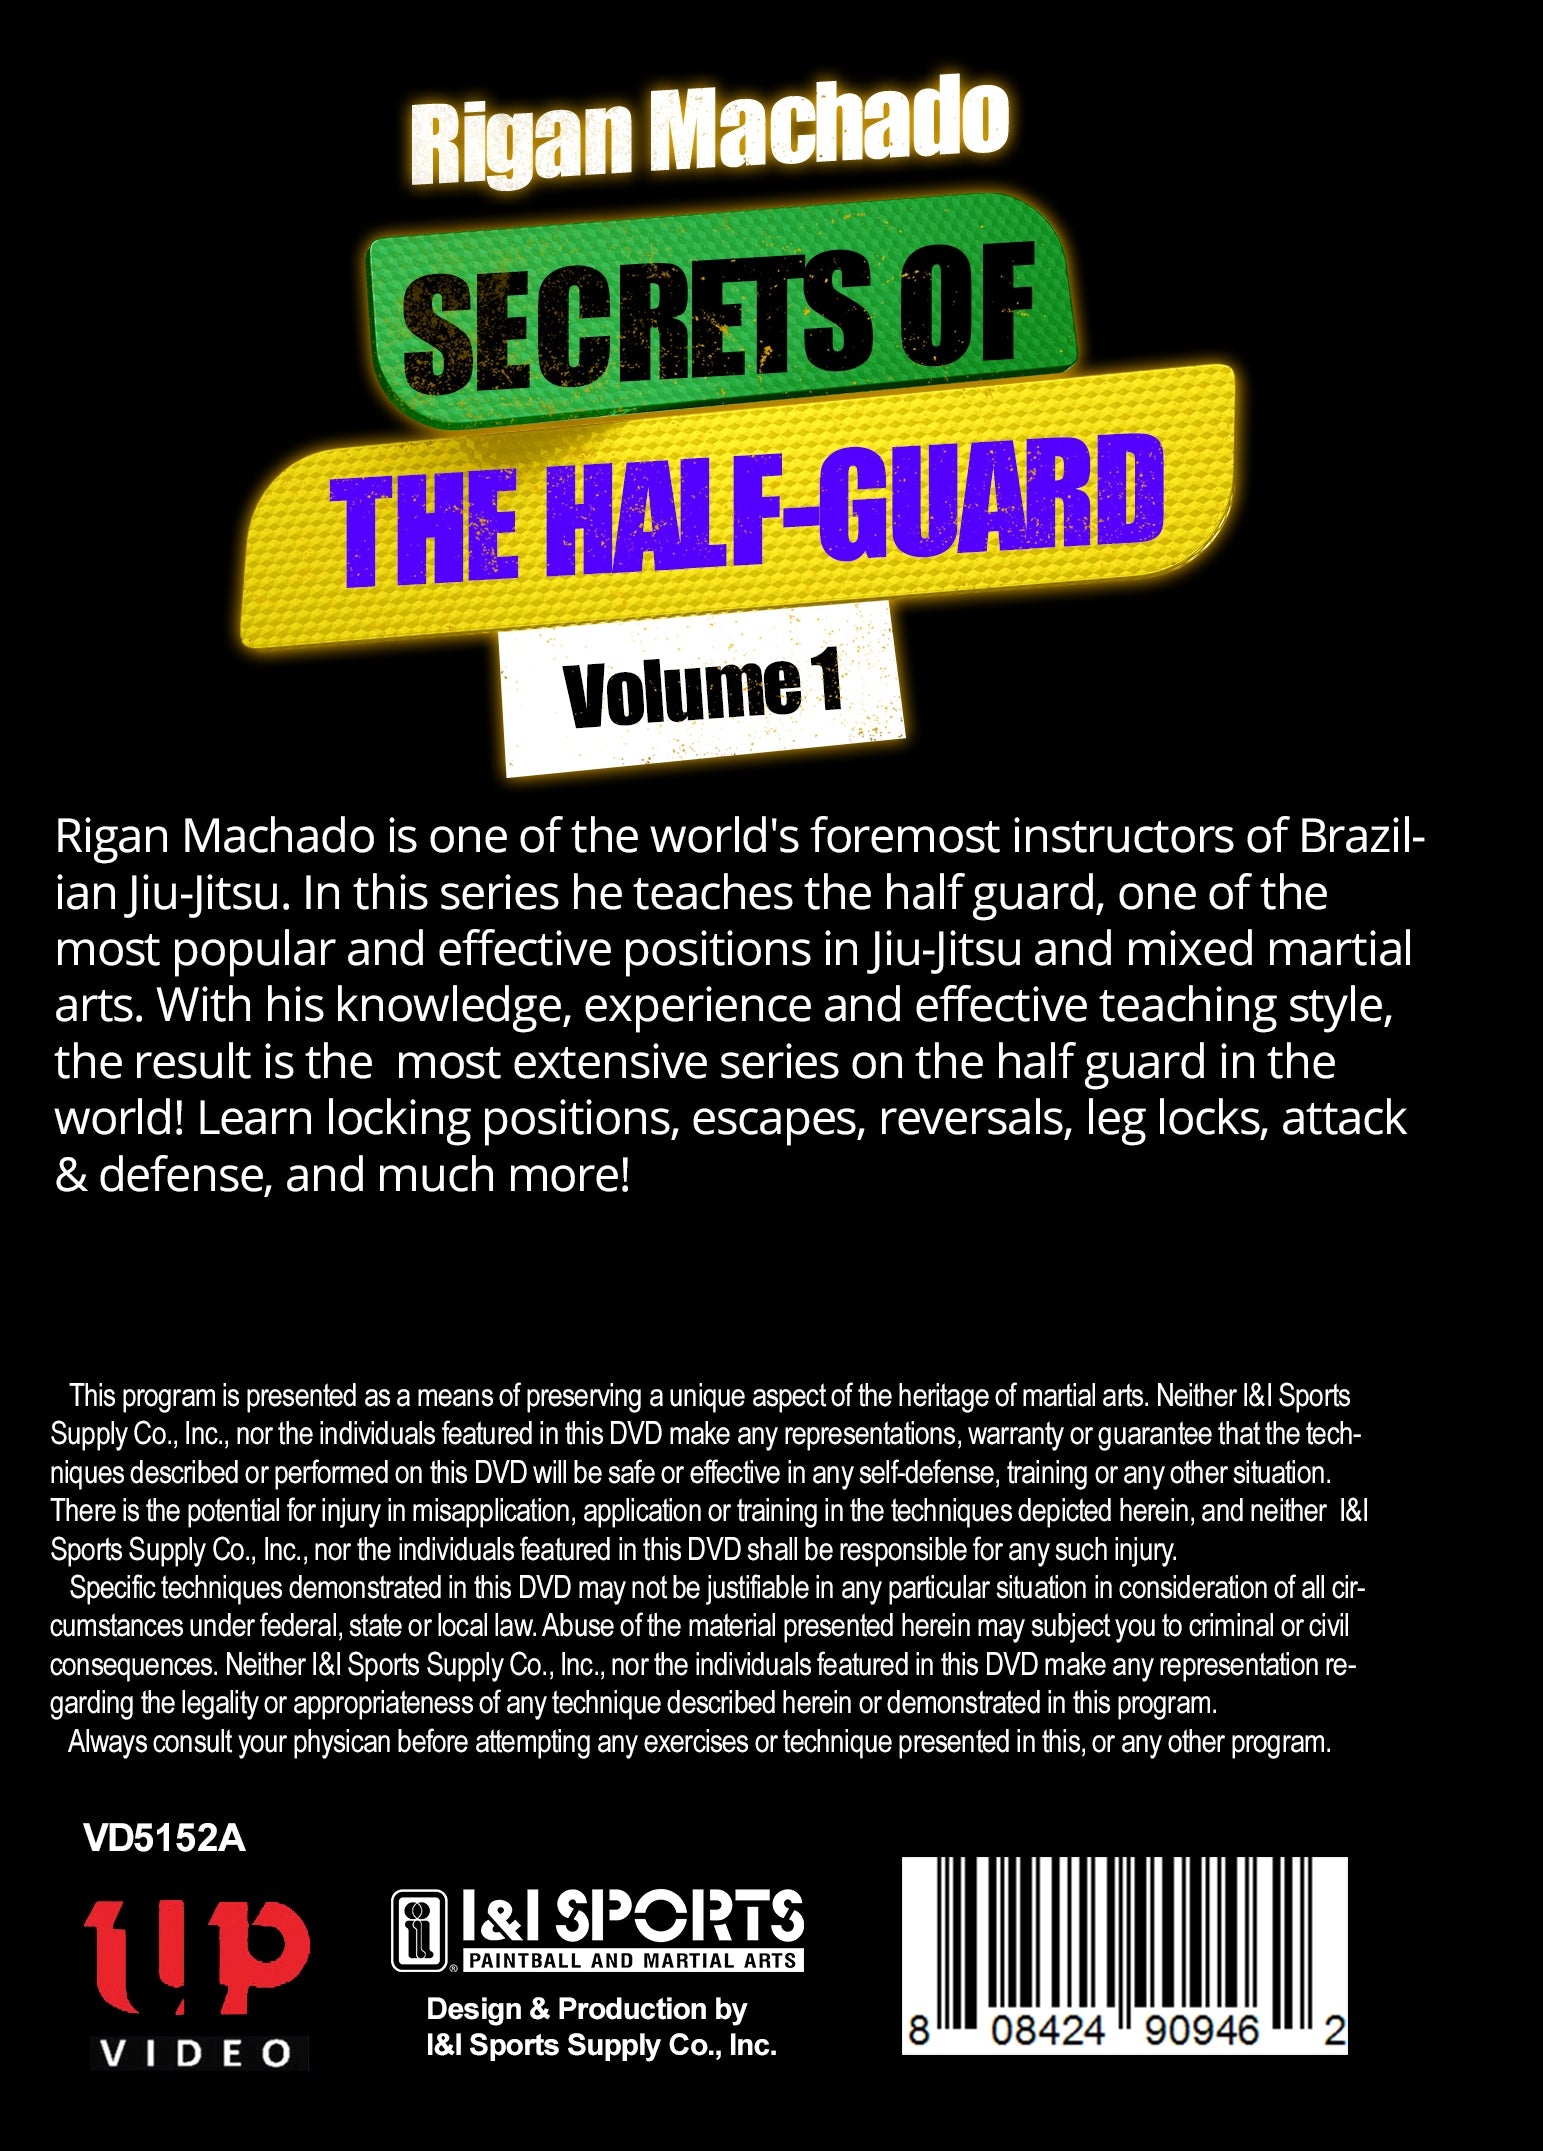 Brazilian Jiu Jitsu Secrets of Half-Guard #1 DVD Rigan Machado mma escapes